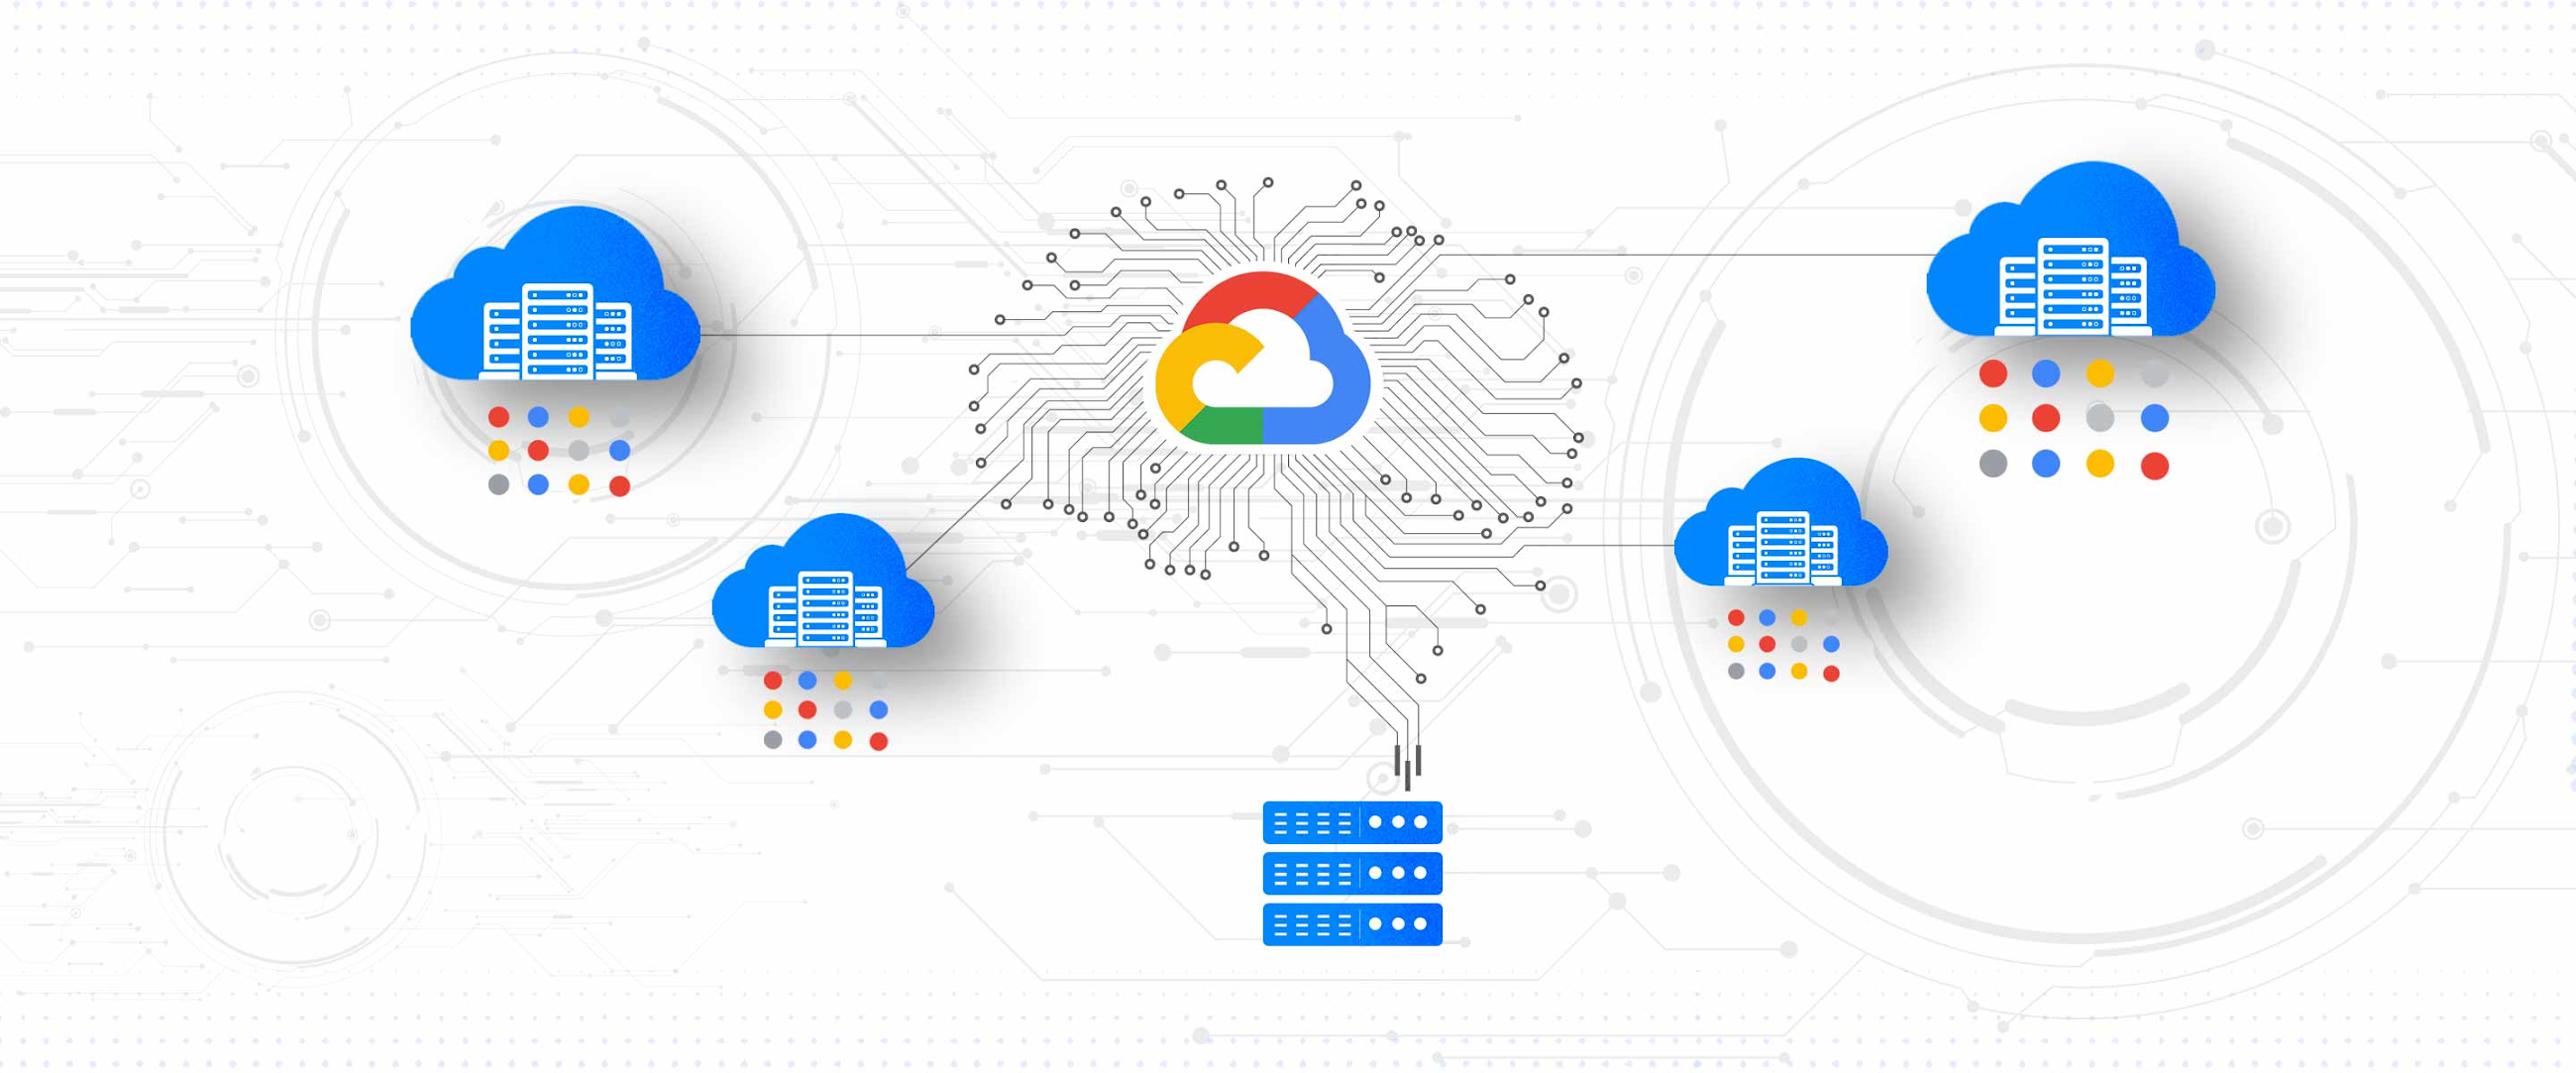 Google Cloud and Dell PowerScale transforming EDA design | Google Cloud Blog